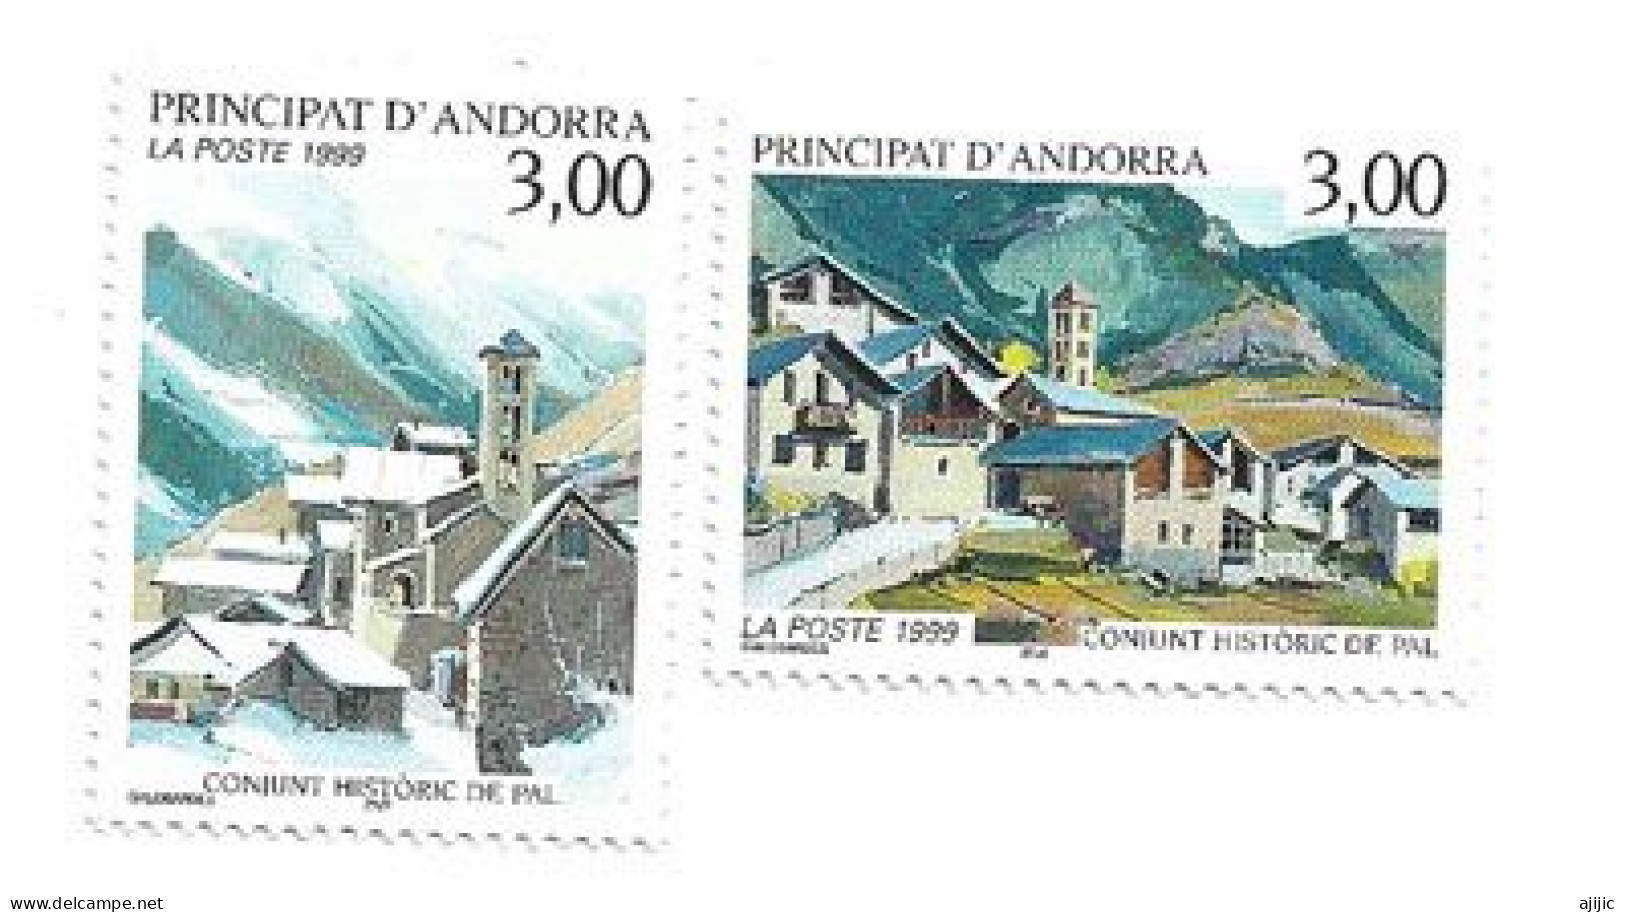 ANDORRA.  Pal Village (Famous World Ski Station In Andorra)  PAL-ARINSAL.   2 Stamps MNH ** - Skiing